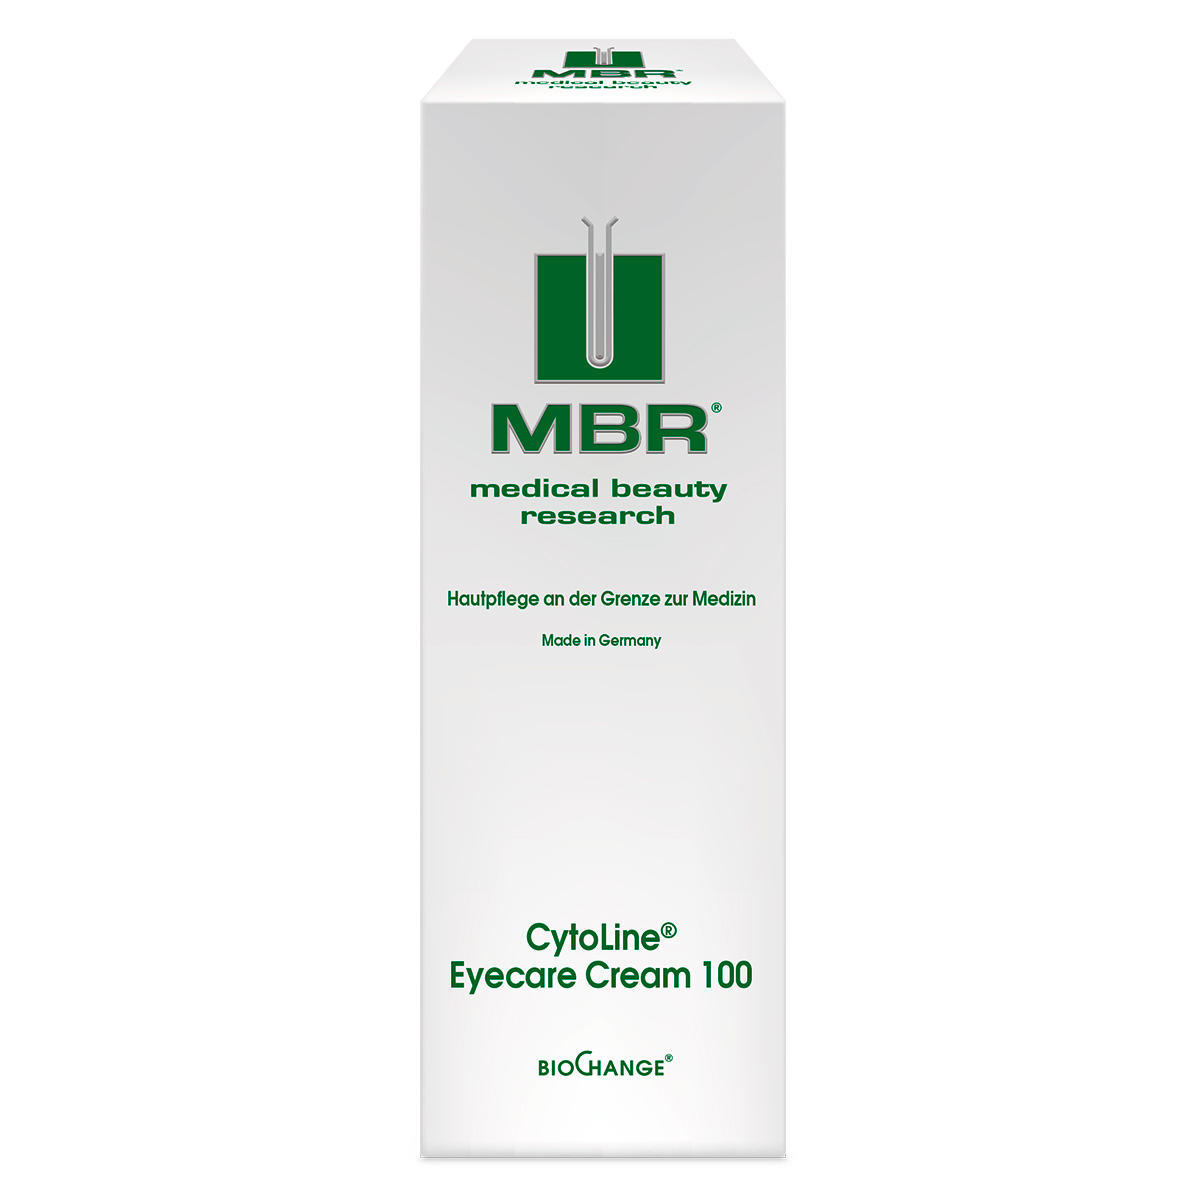 MBR Medical Beauty Research BioChange CytoLine Eyecare Cream 100 30 ml - 2